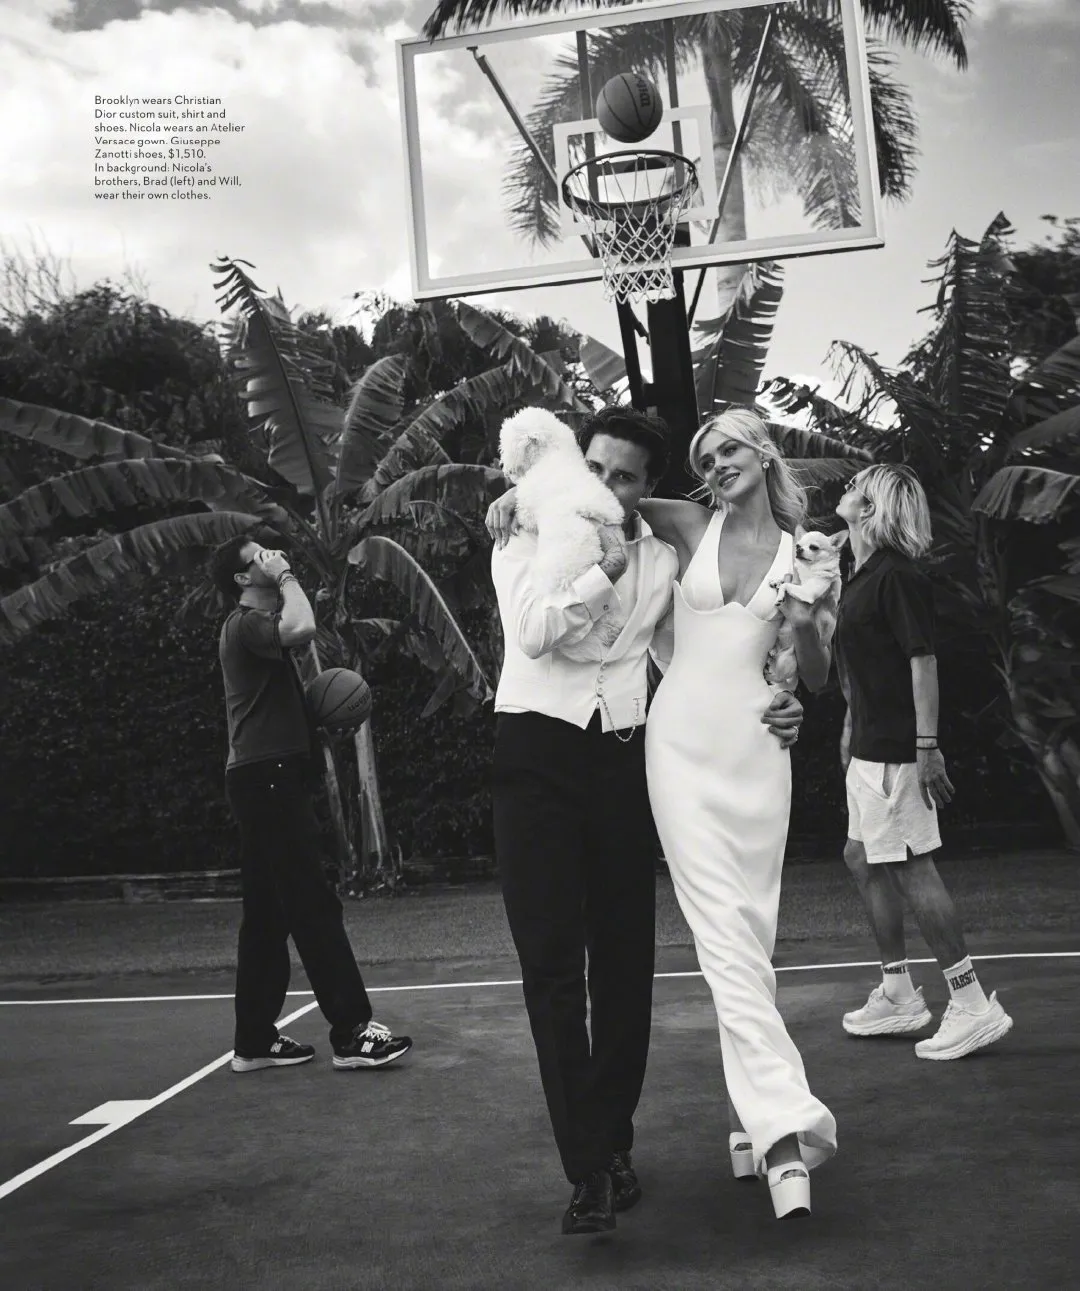 Brooklyn Joseph Beckham and Nicola Peltz, "Vogue" magazine Australia July issue photo | FMV6